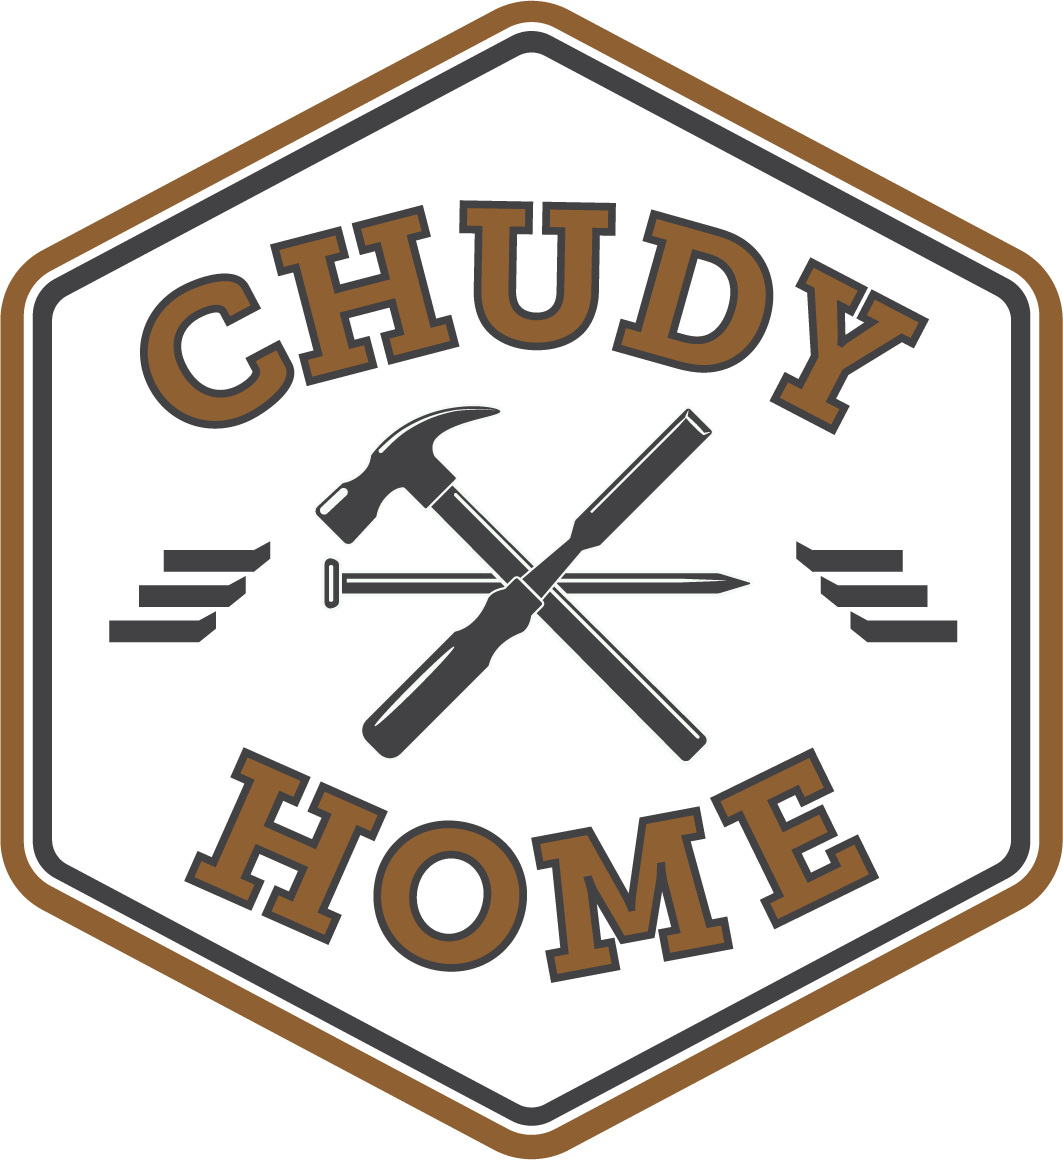 Chudy Home Logo